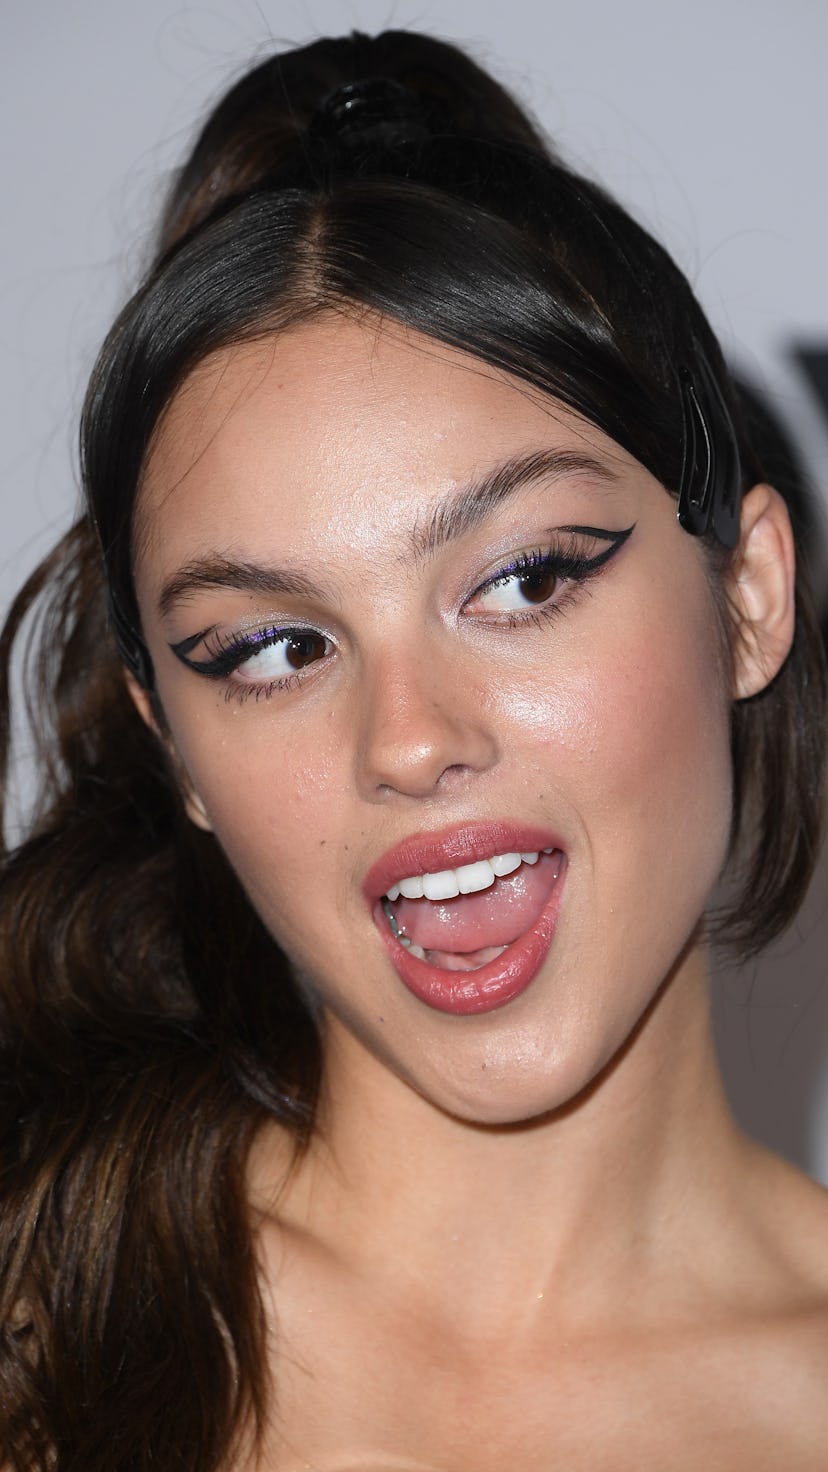 Olivia Rodrigo at the iHeartRadio Music Awards wearing graphic black eyeliner trend